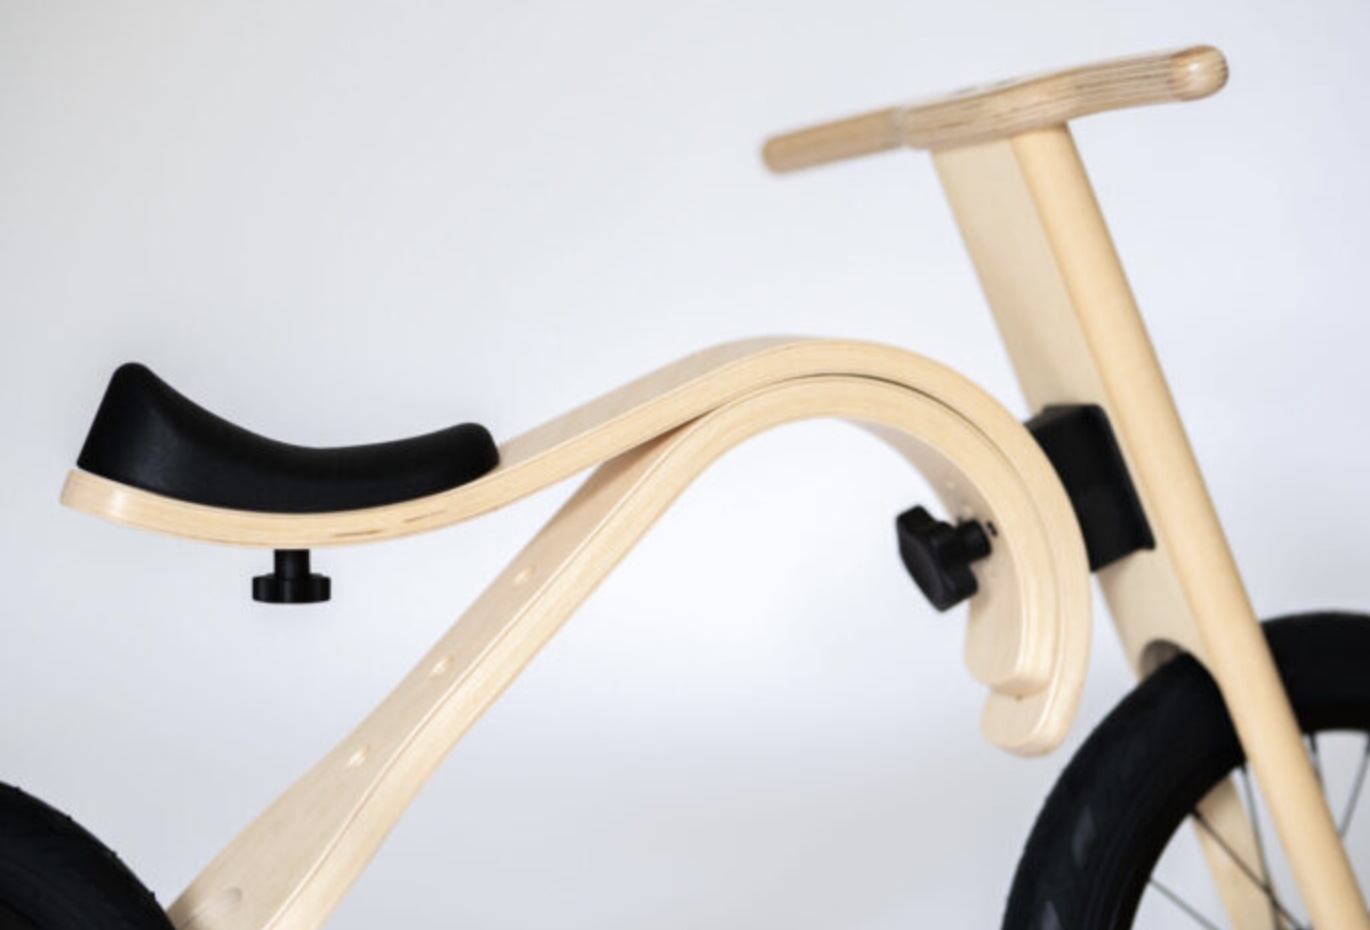 Holzfahrrad für Kinder - Pedal Bike - WoodyBike - Leg&go